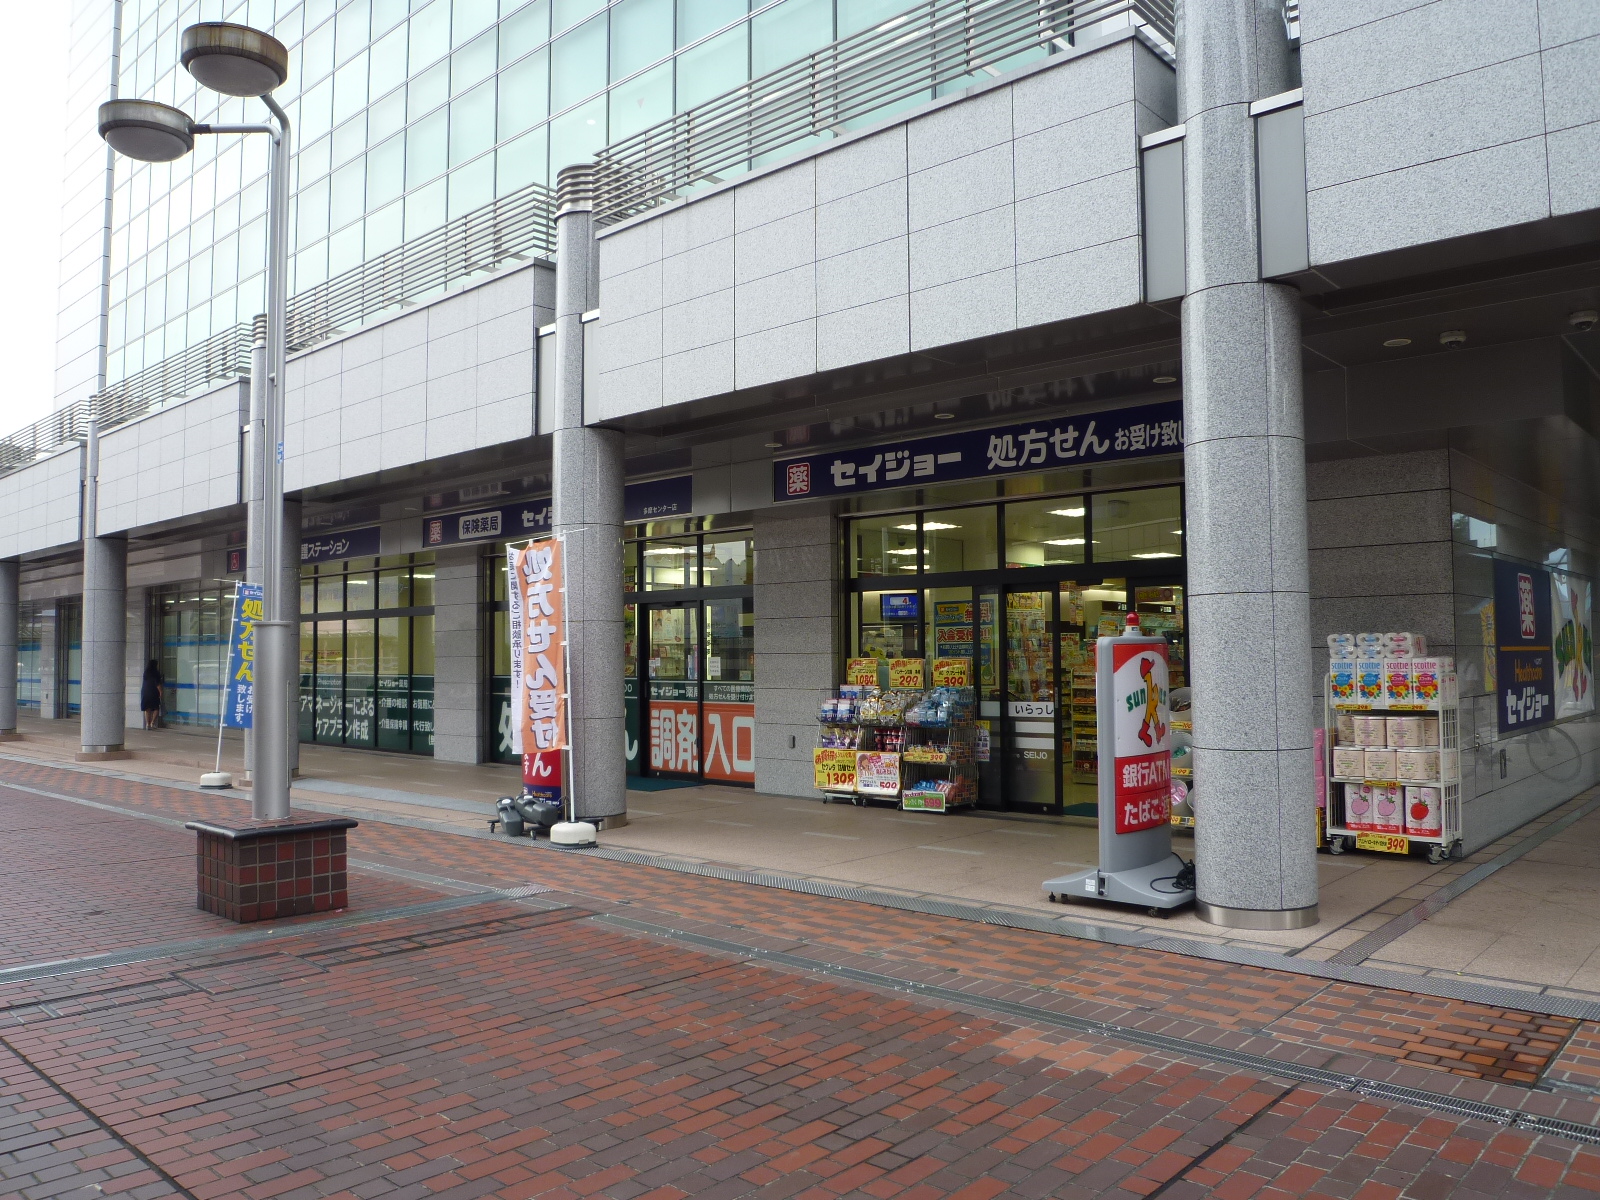 Dorakkusutoa. Seijo pharmacy Tama Center shop 476m until (drugstore)